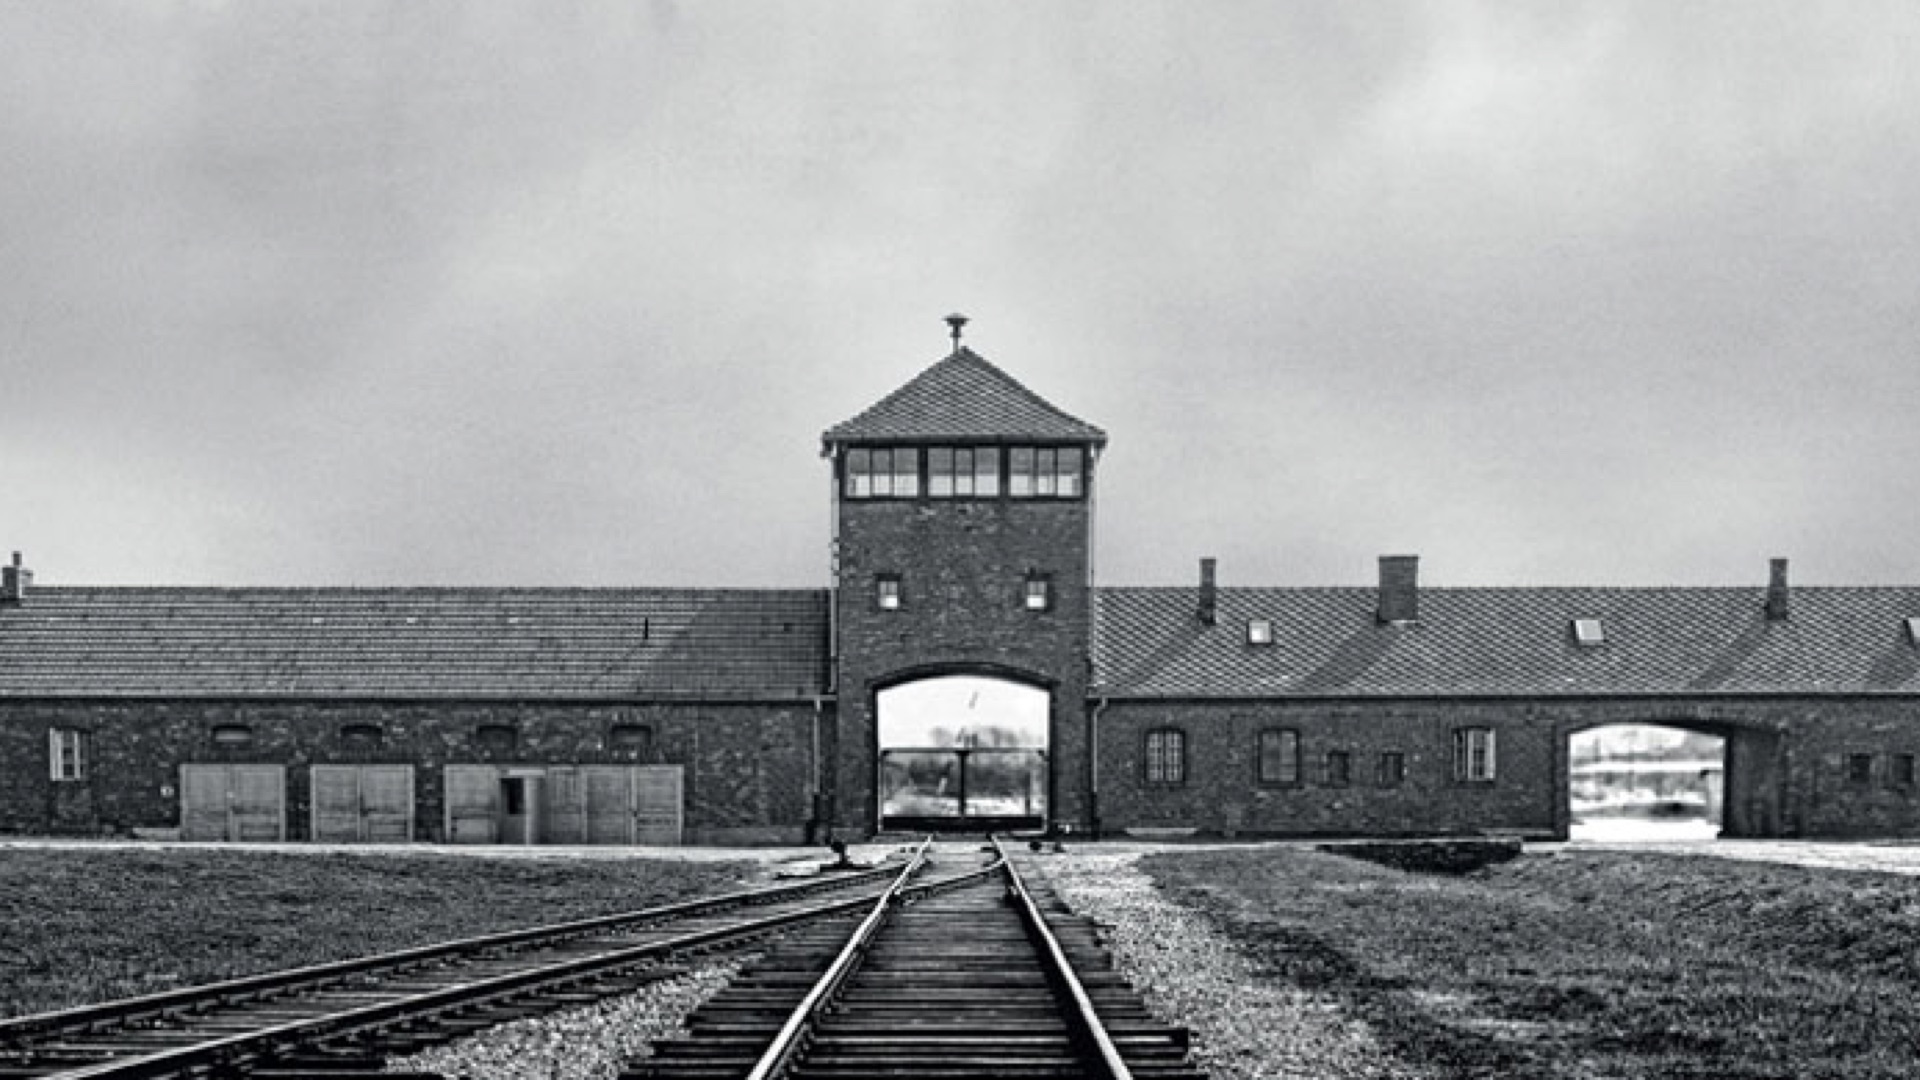 The Auschwitz Exhibition Comes to Boston